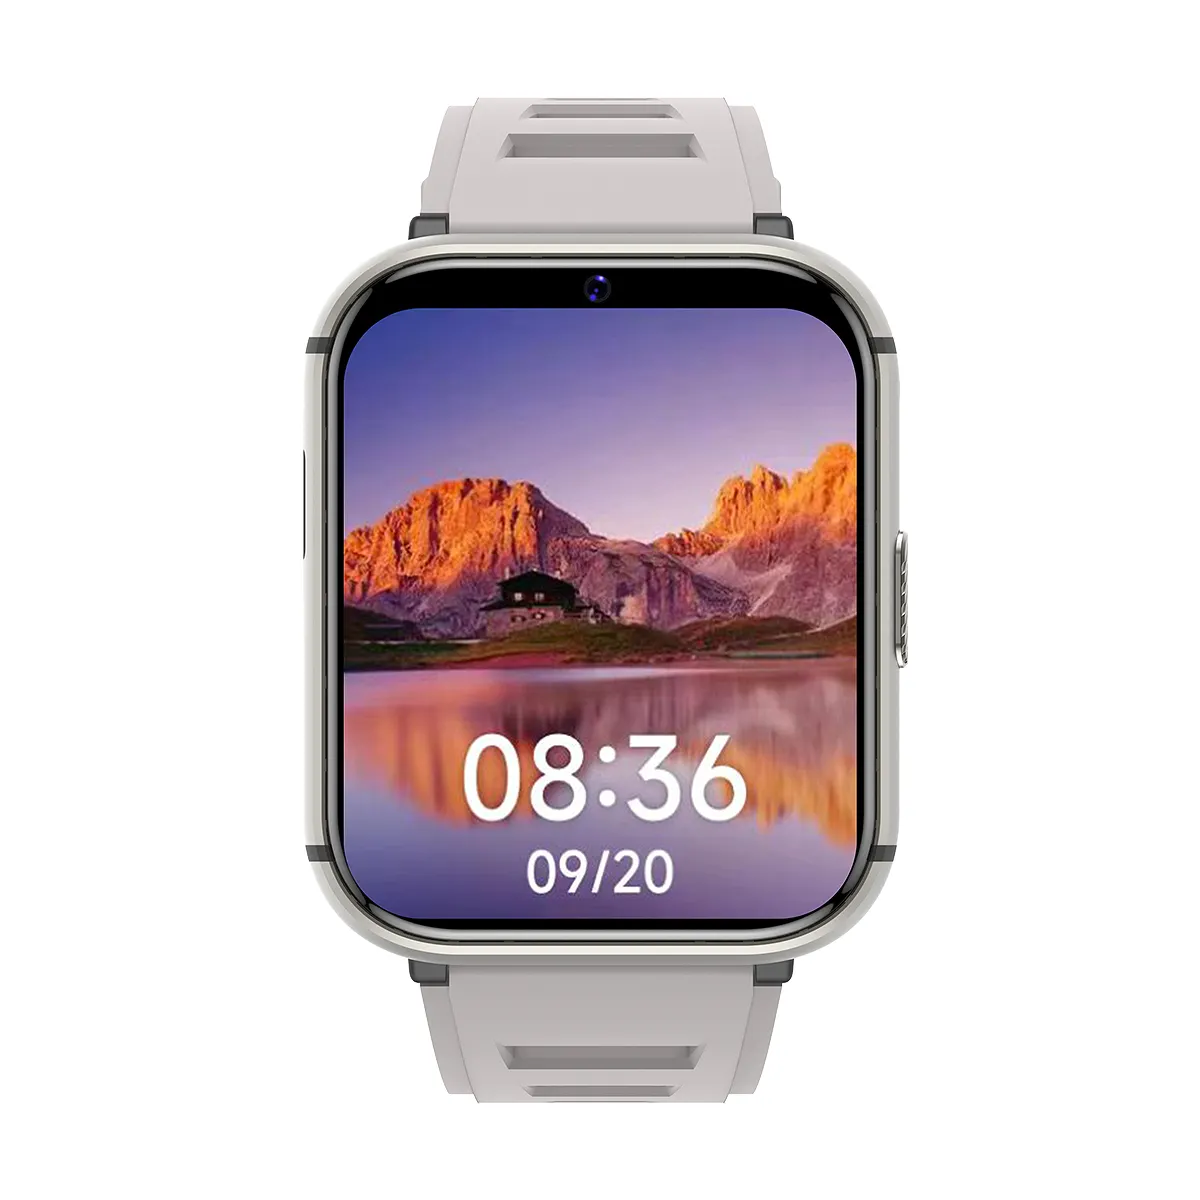 23 Smartwatch DW89 Text Factory Price Shenzhen Qianrun Q668 4G Wifi Gps Phone Video Google Hebrew Download App Smart Watch dw88